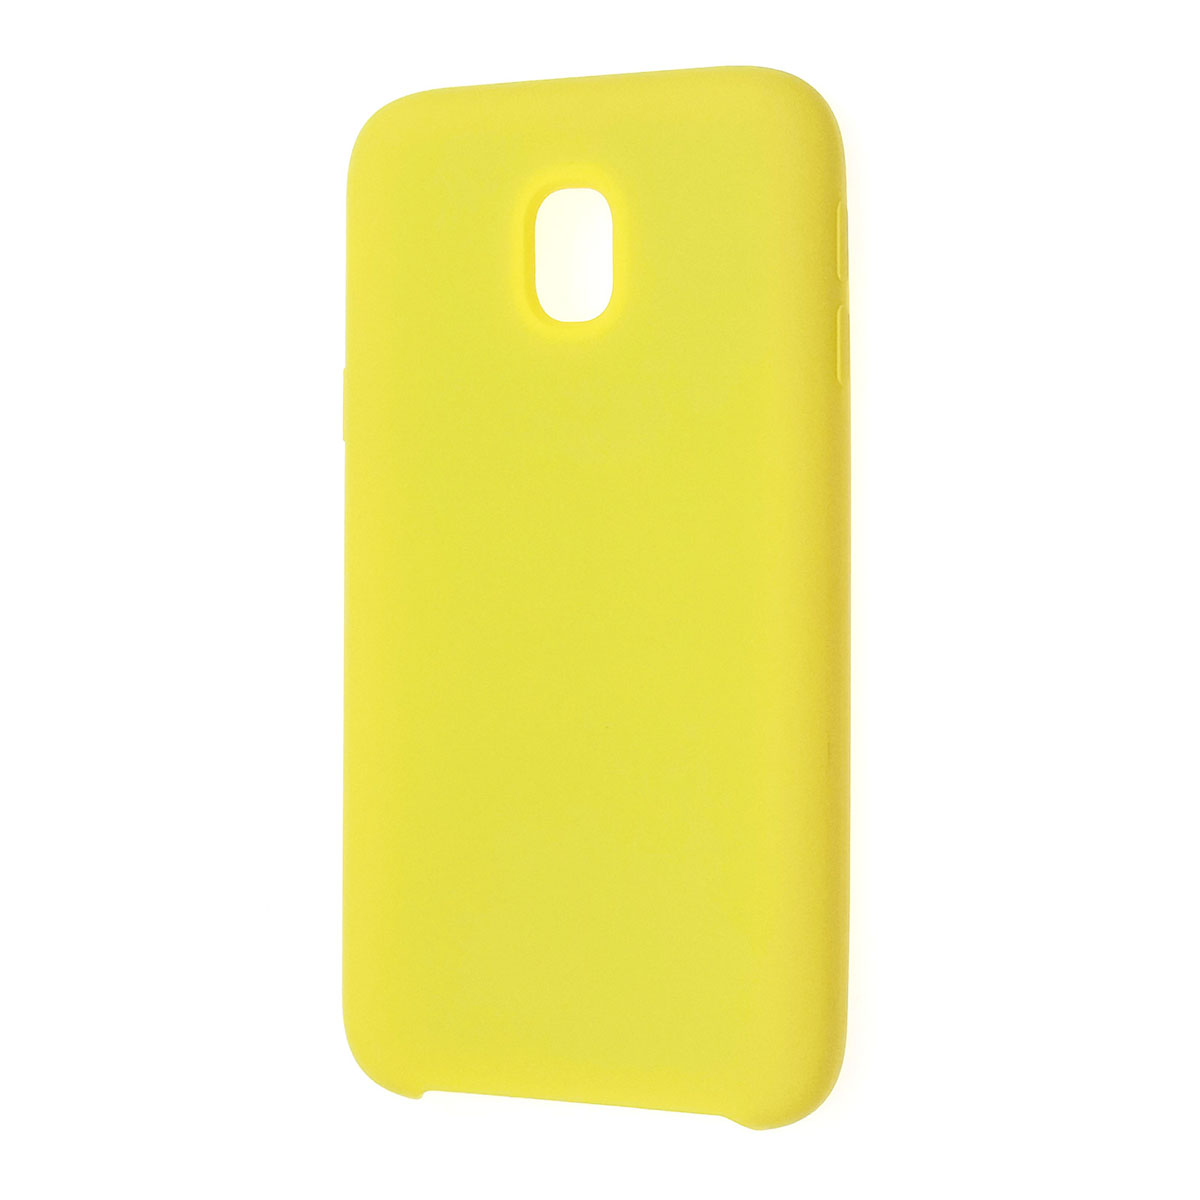 Чехол накладка Silicon Cover для SAMSUNG Galaxy J3 2017 (SM-J330), силикон, цвет желтый.